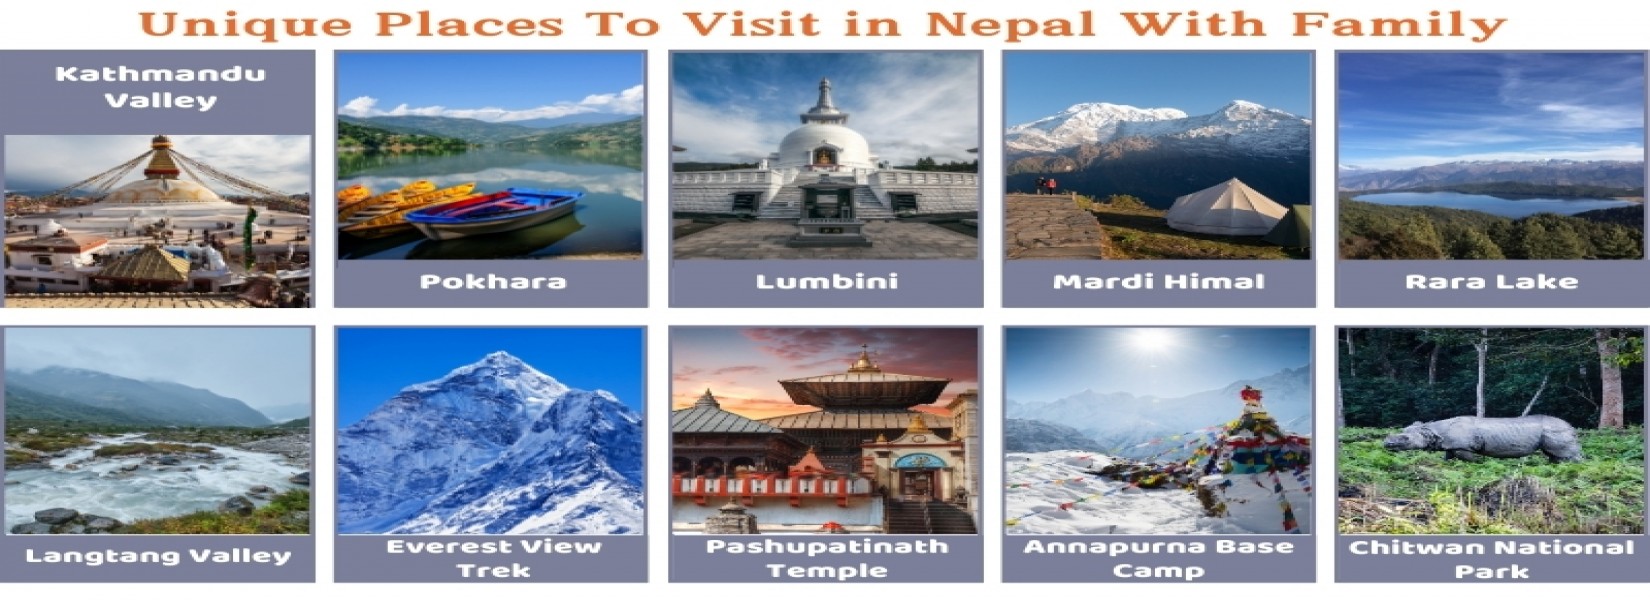 Unique Places To Visit in Nepal